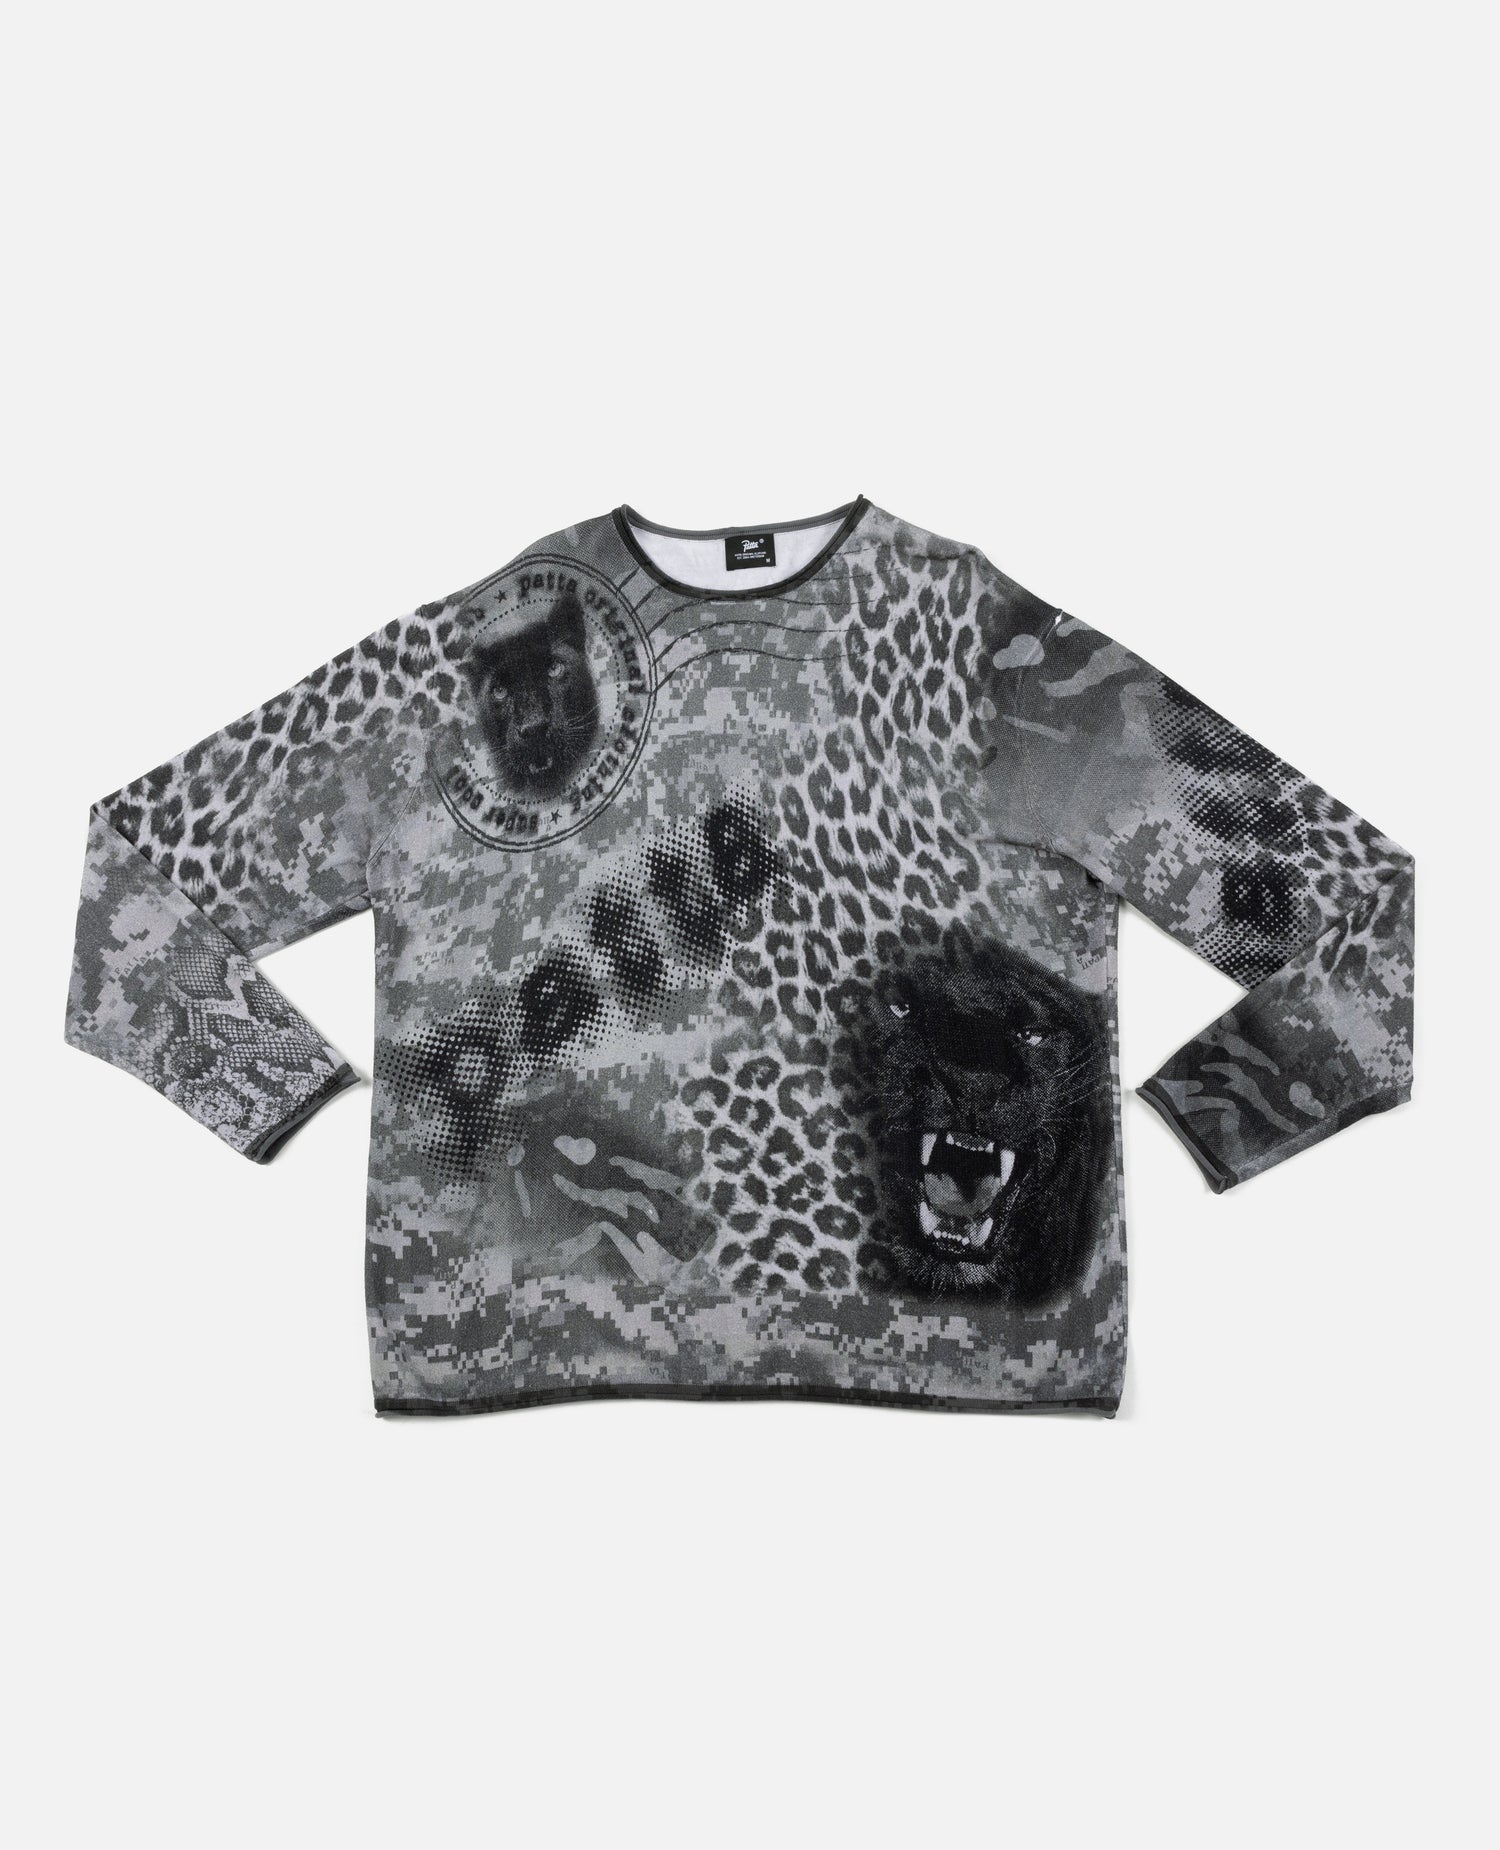 Patta Jungle Knitted Longsleeve T-Shirt (Multi/Grayscale)